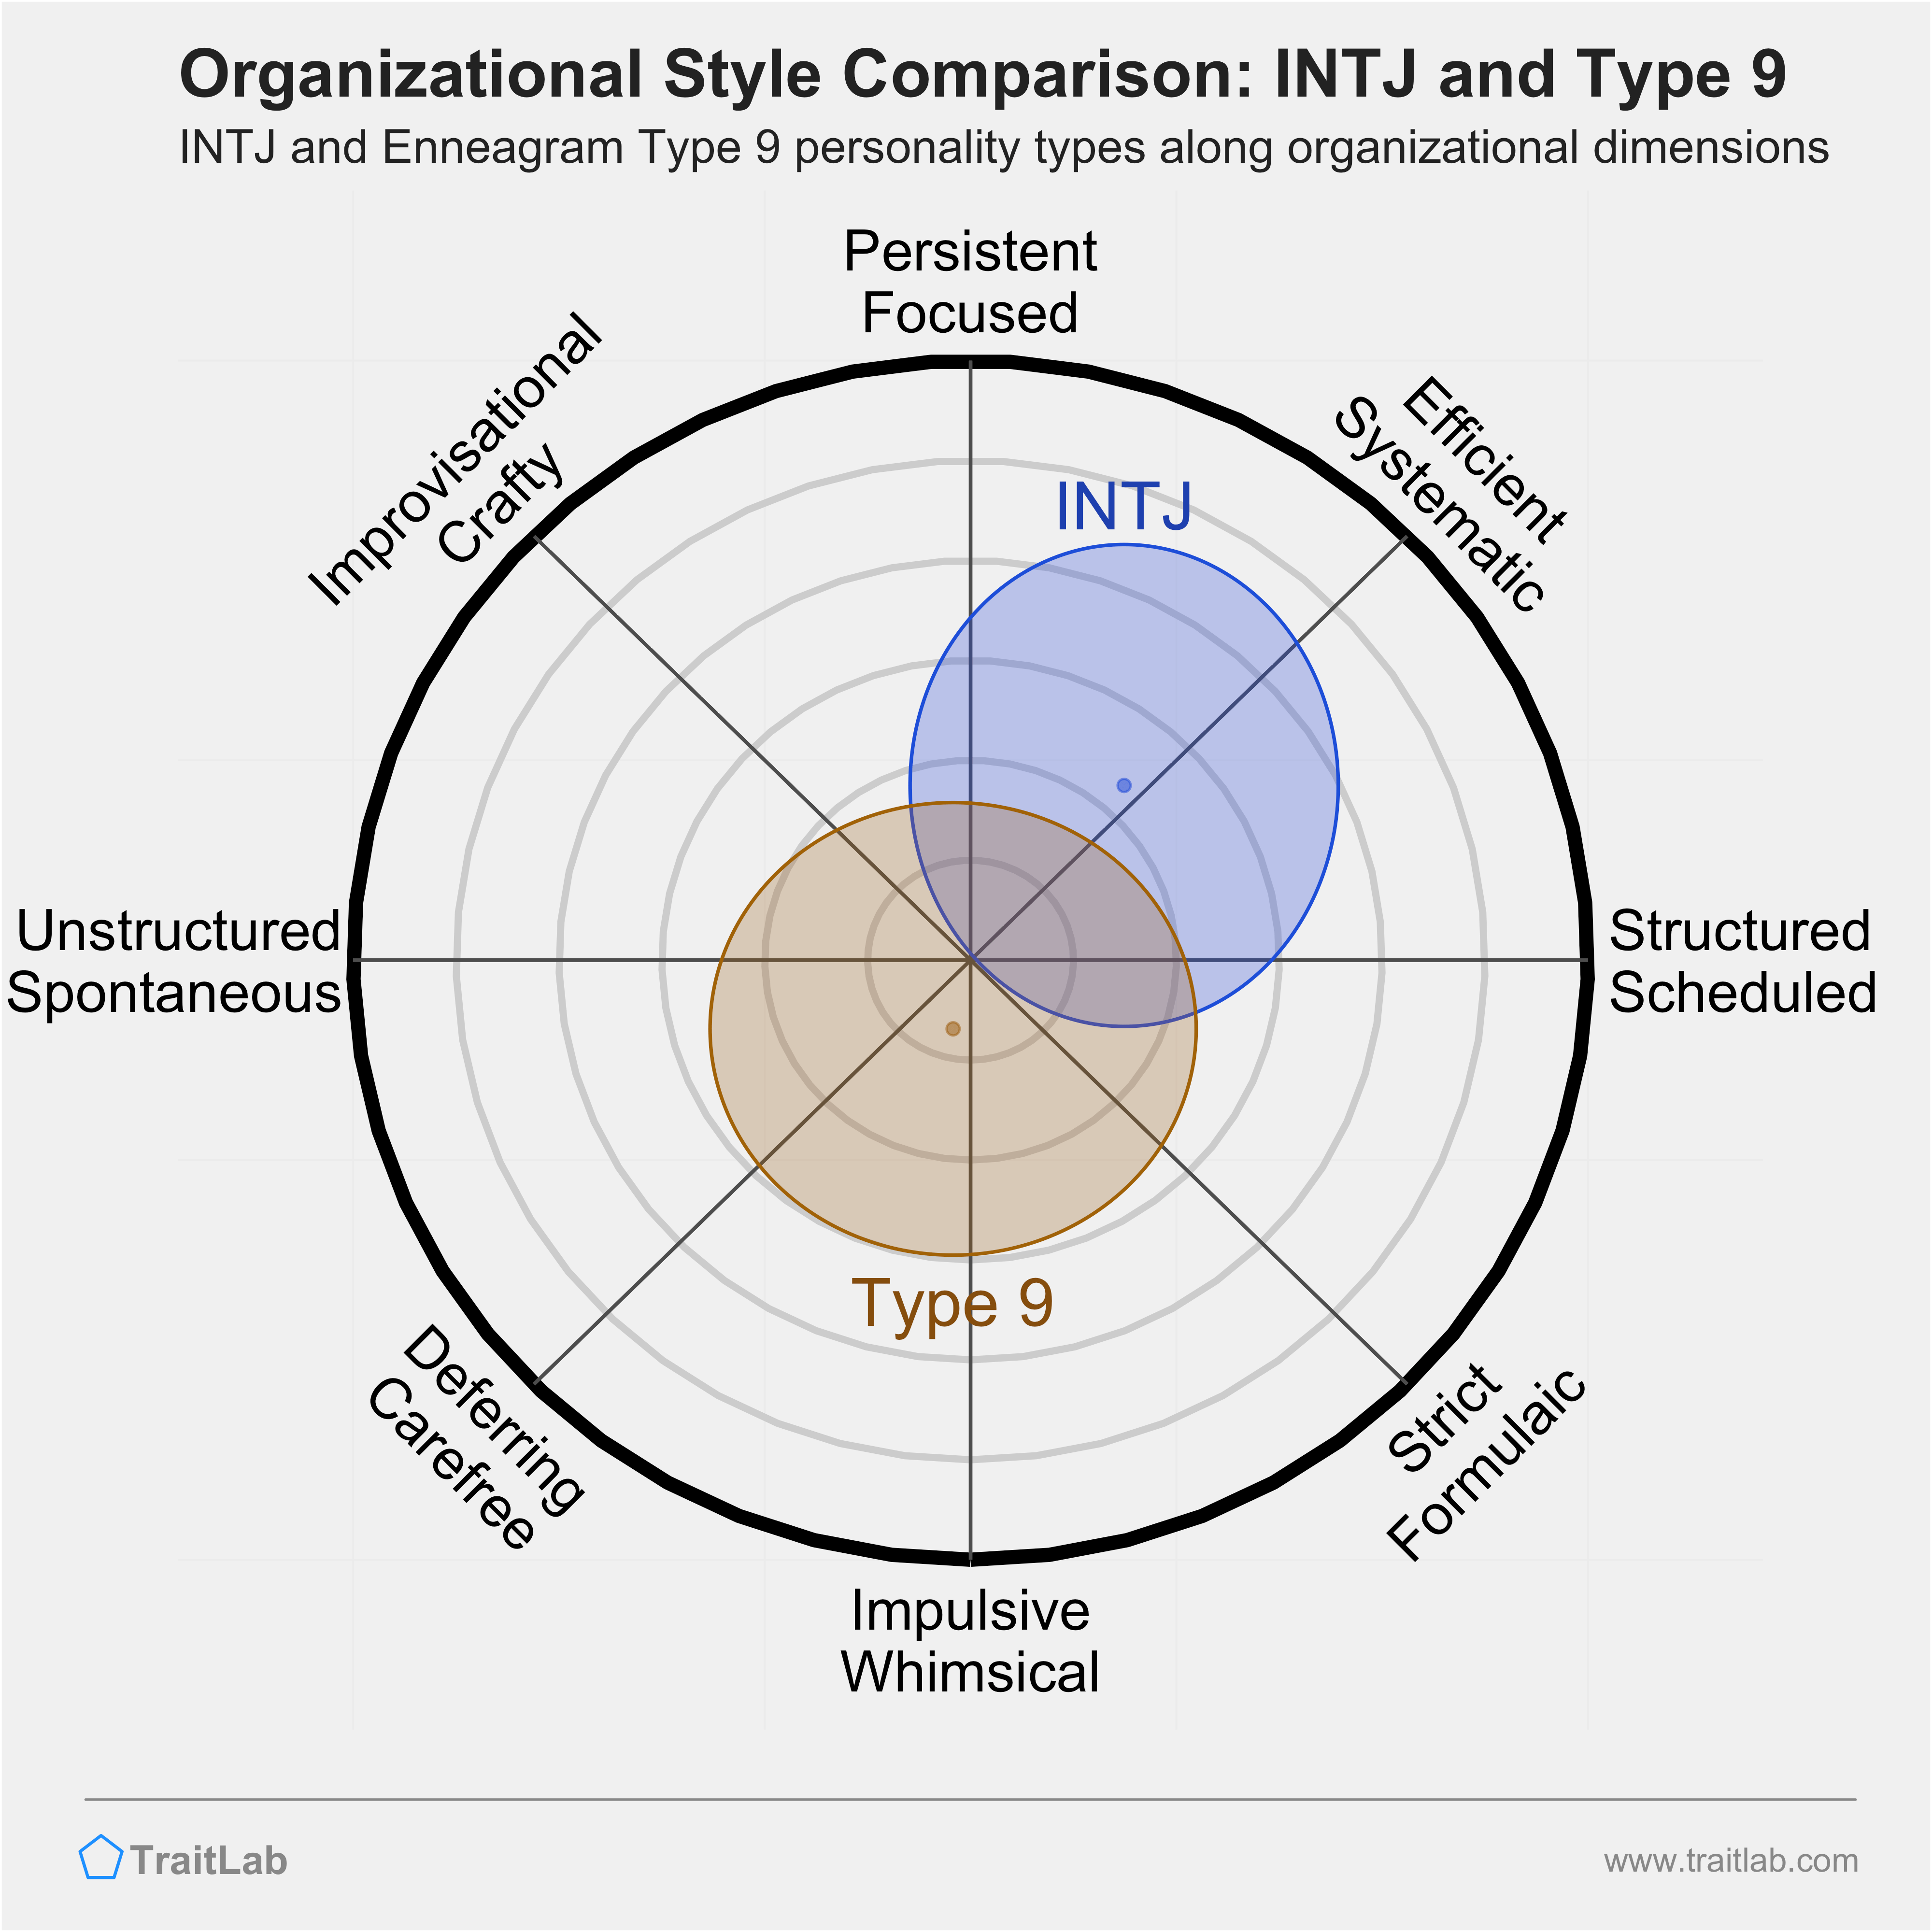 INTJ and Type 9 comparison across organizational dimensions